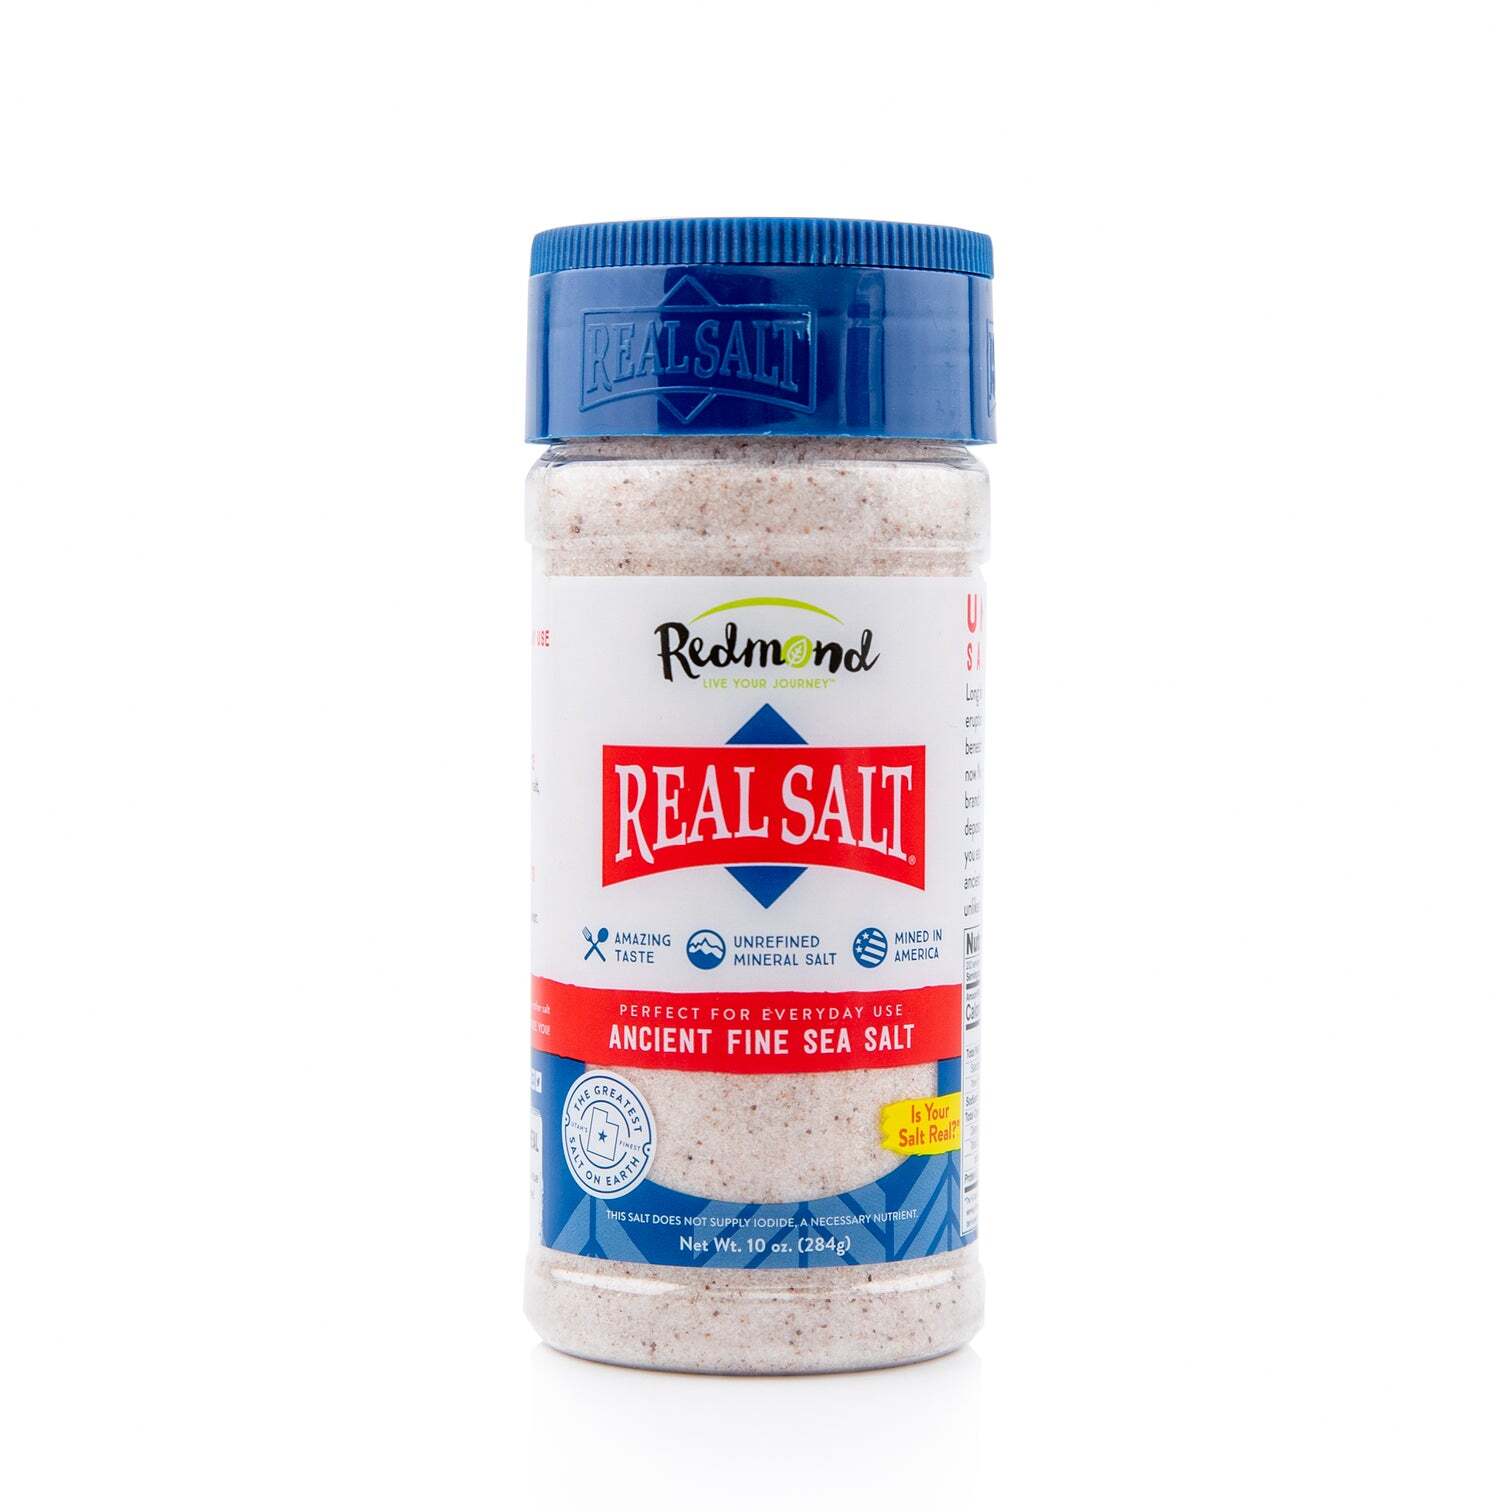 Redmond Real Salt - Ancient Fine Sea Salt 284g - Shaker